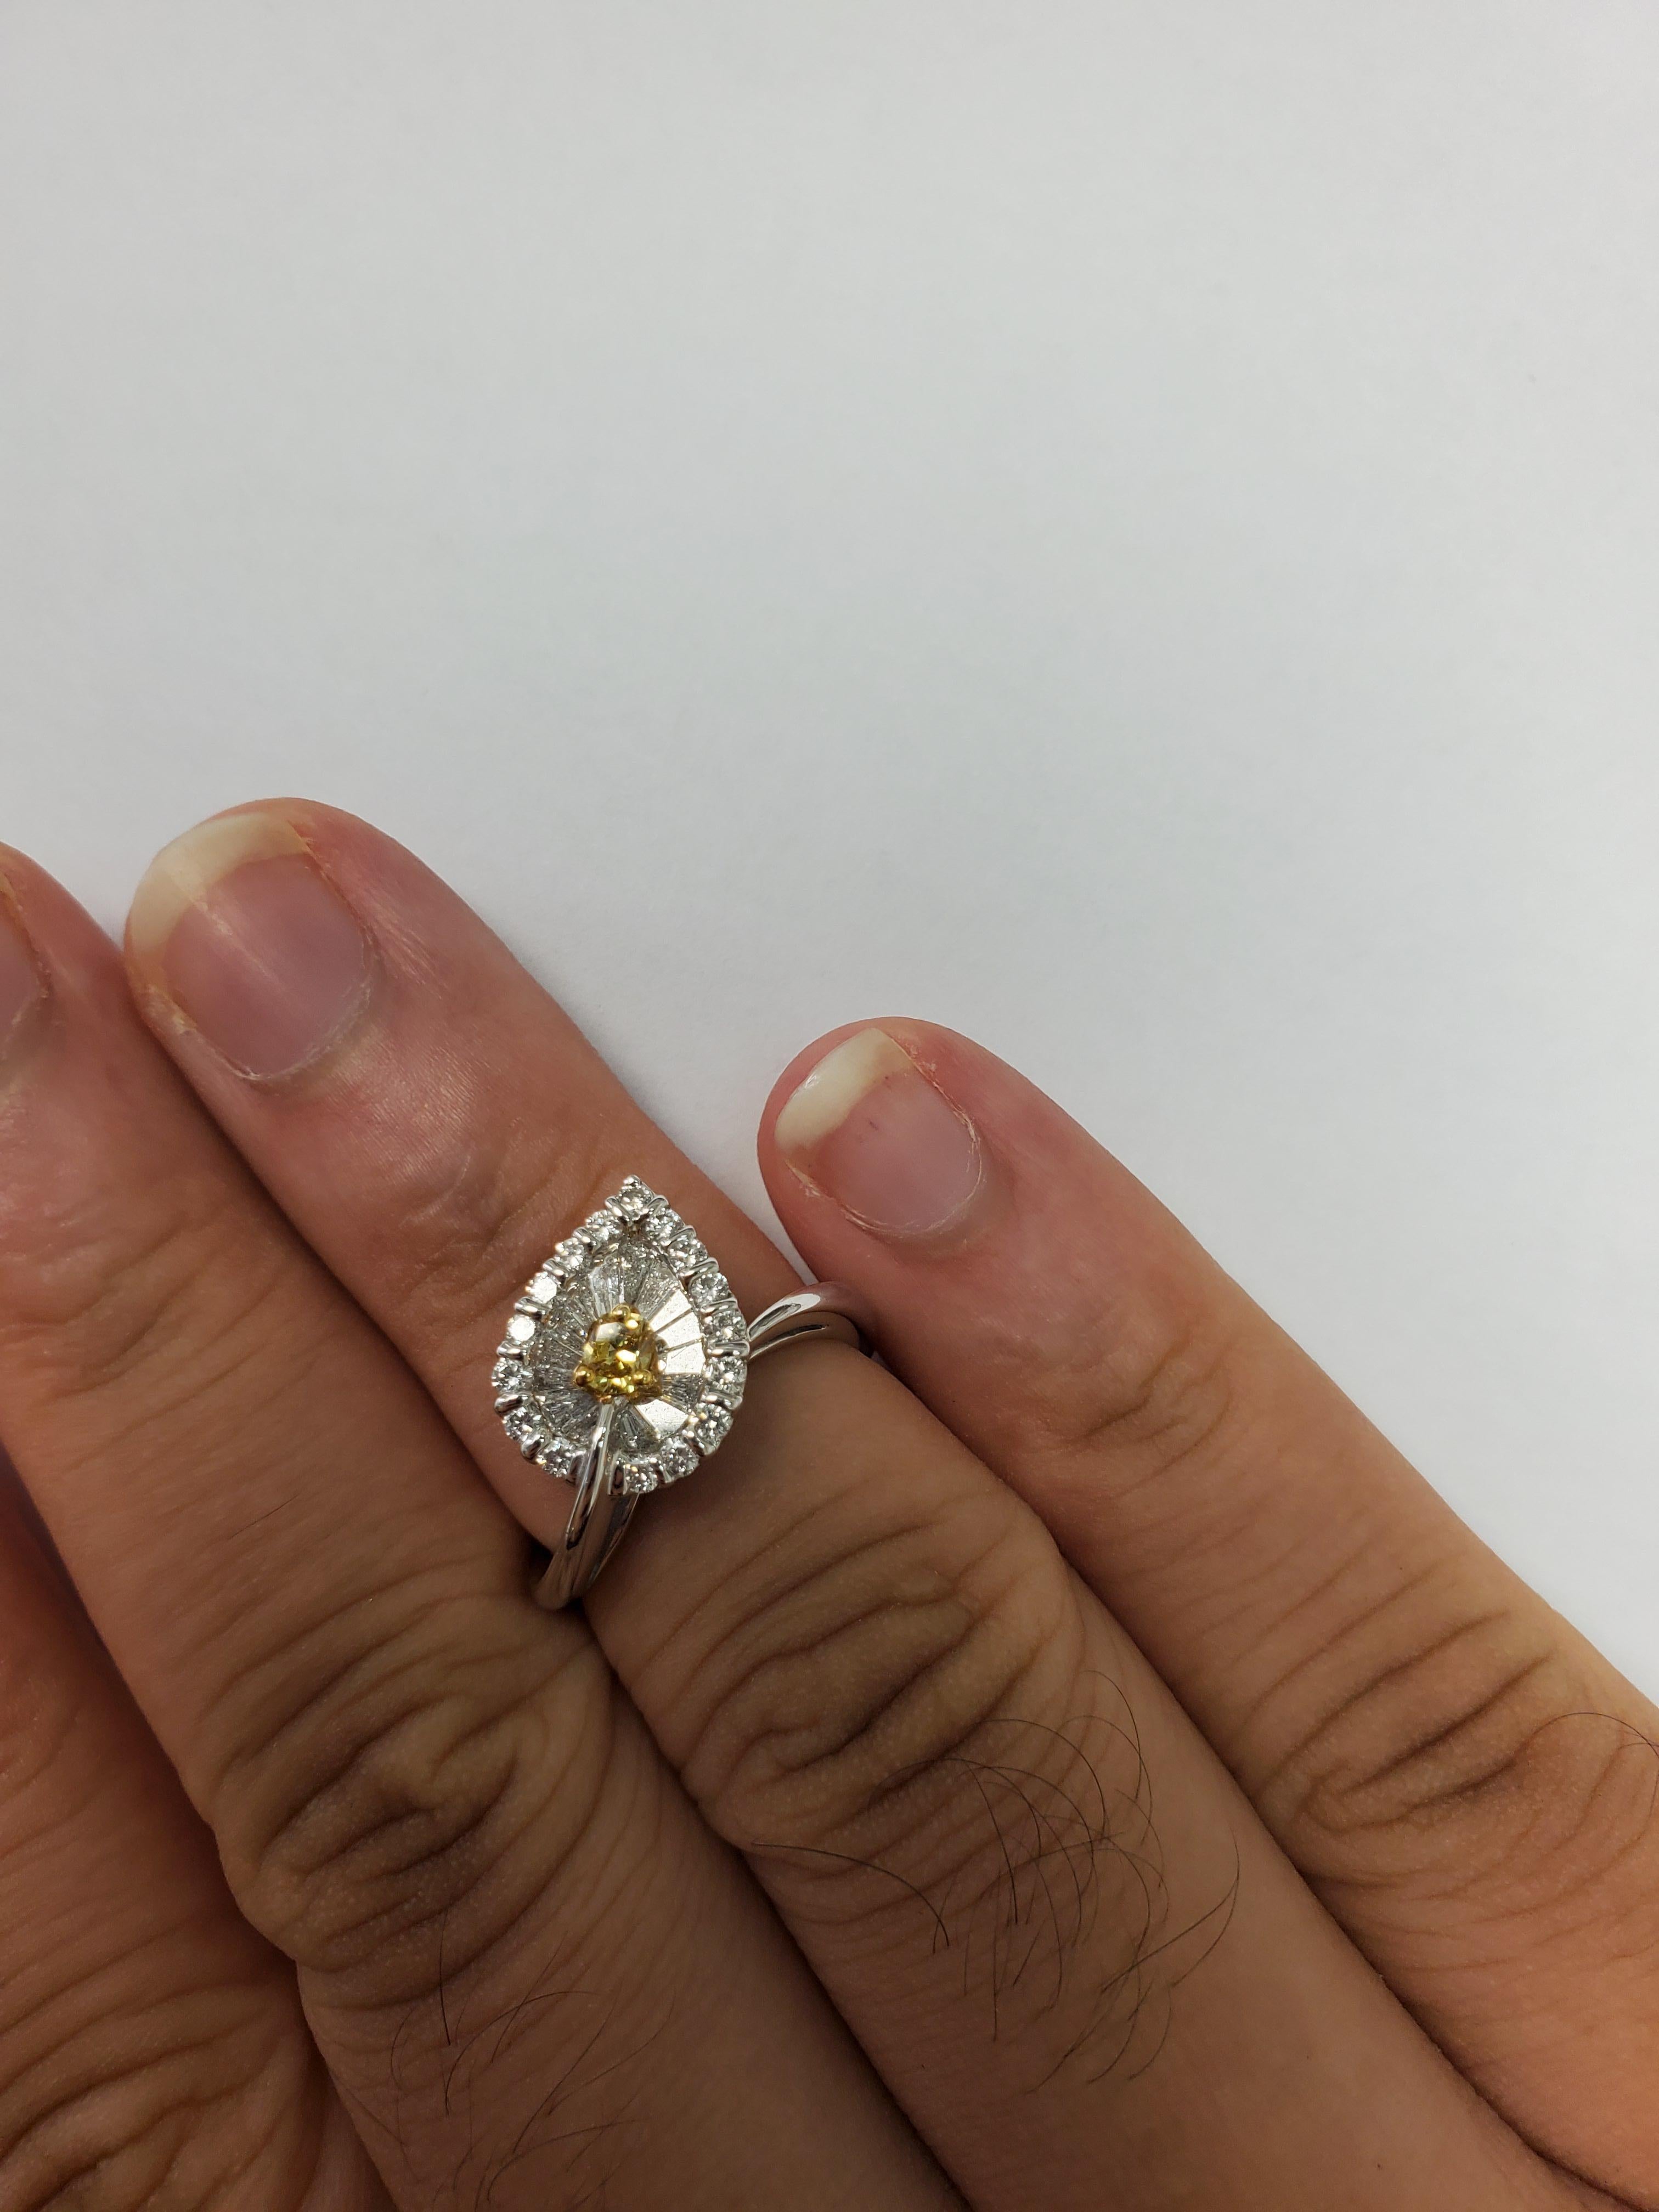 Cushion Cut Fancy Vivid Yellow Diamond Engagement Ring For Sale